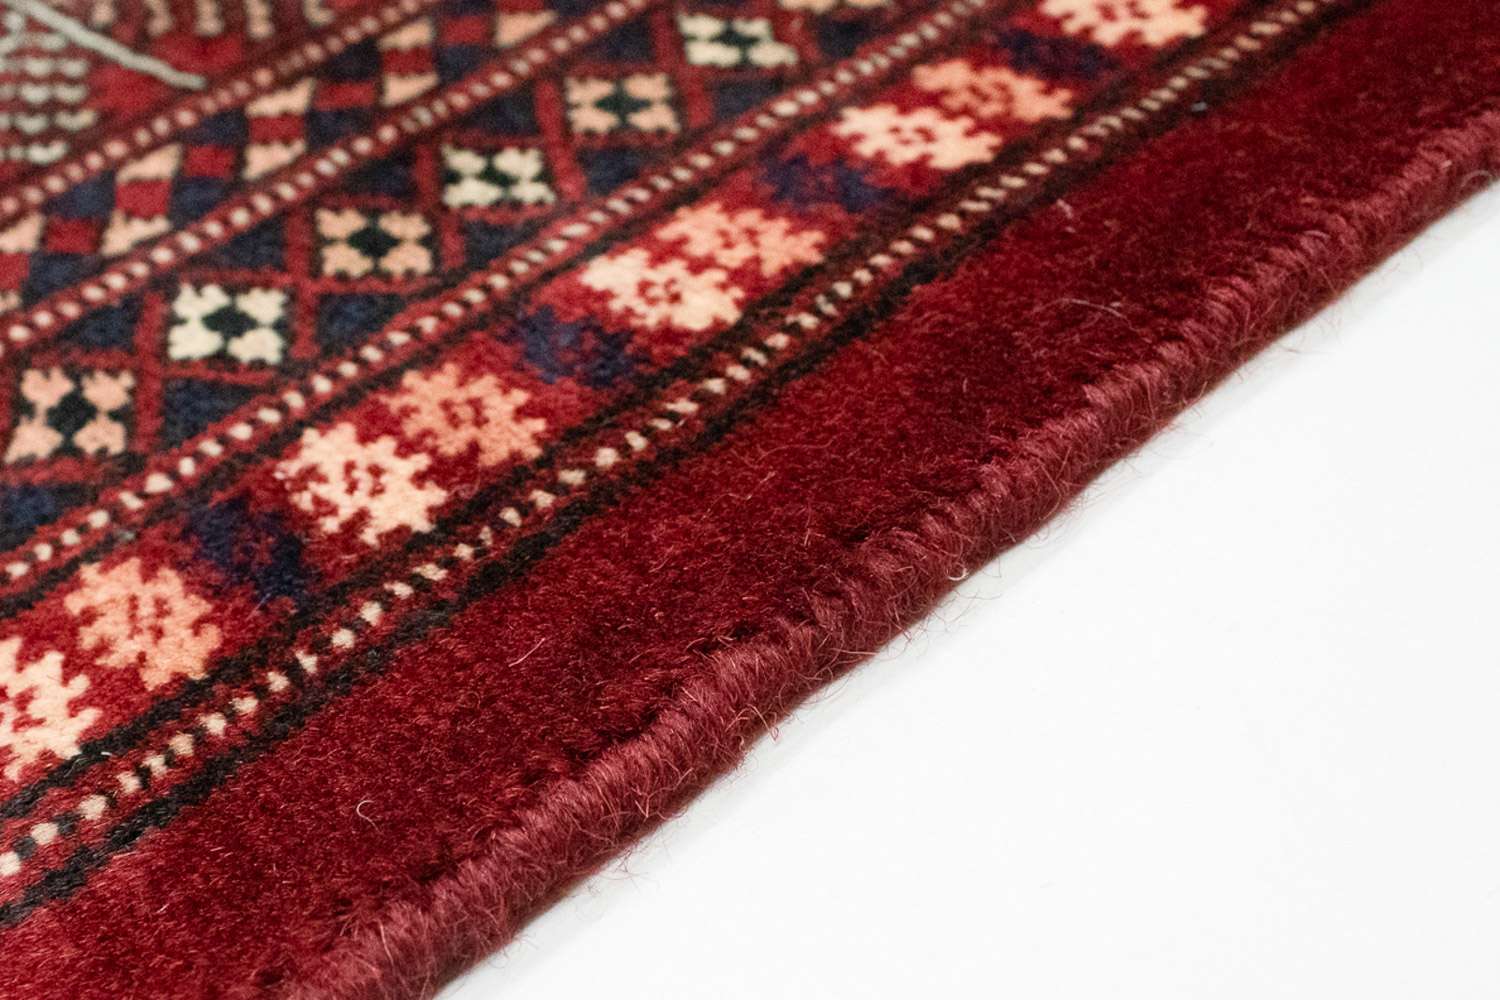 Afghaans tapijt - Bukhara - 247 x 201 cm - rood